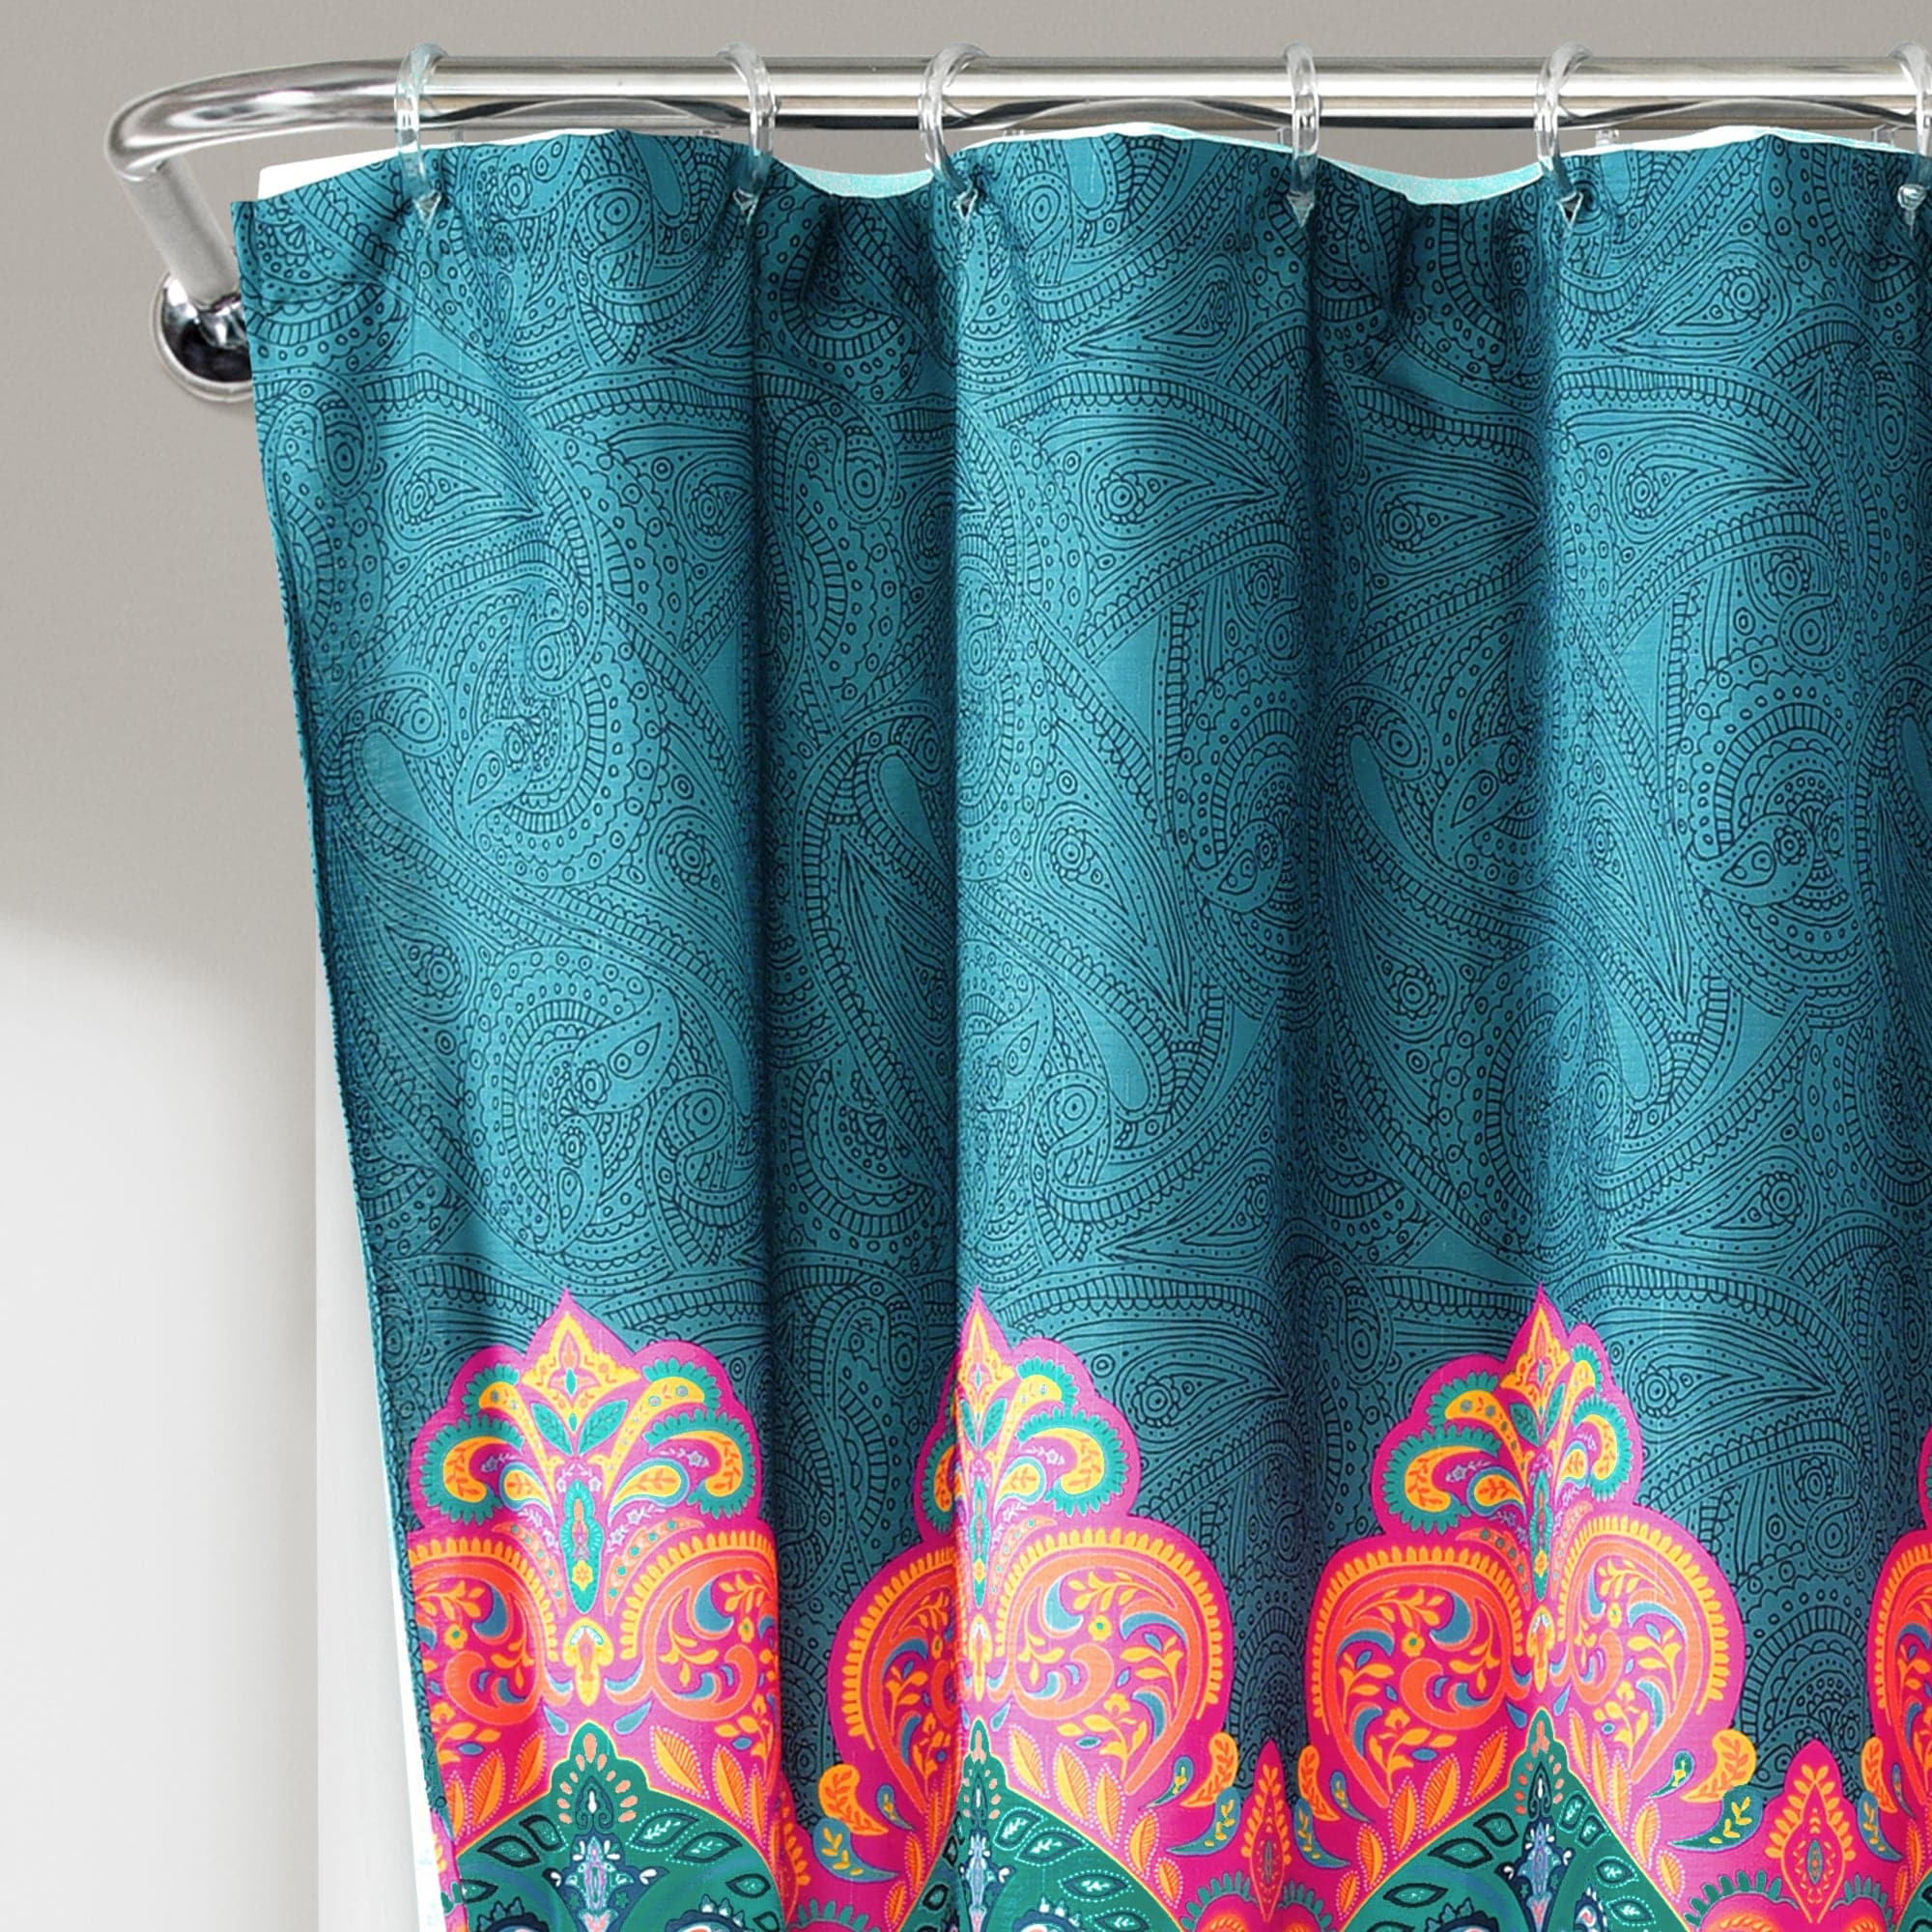  Bath Curtain Blue, Chic Shower Curtain Set W47xH79IN